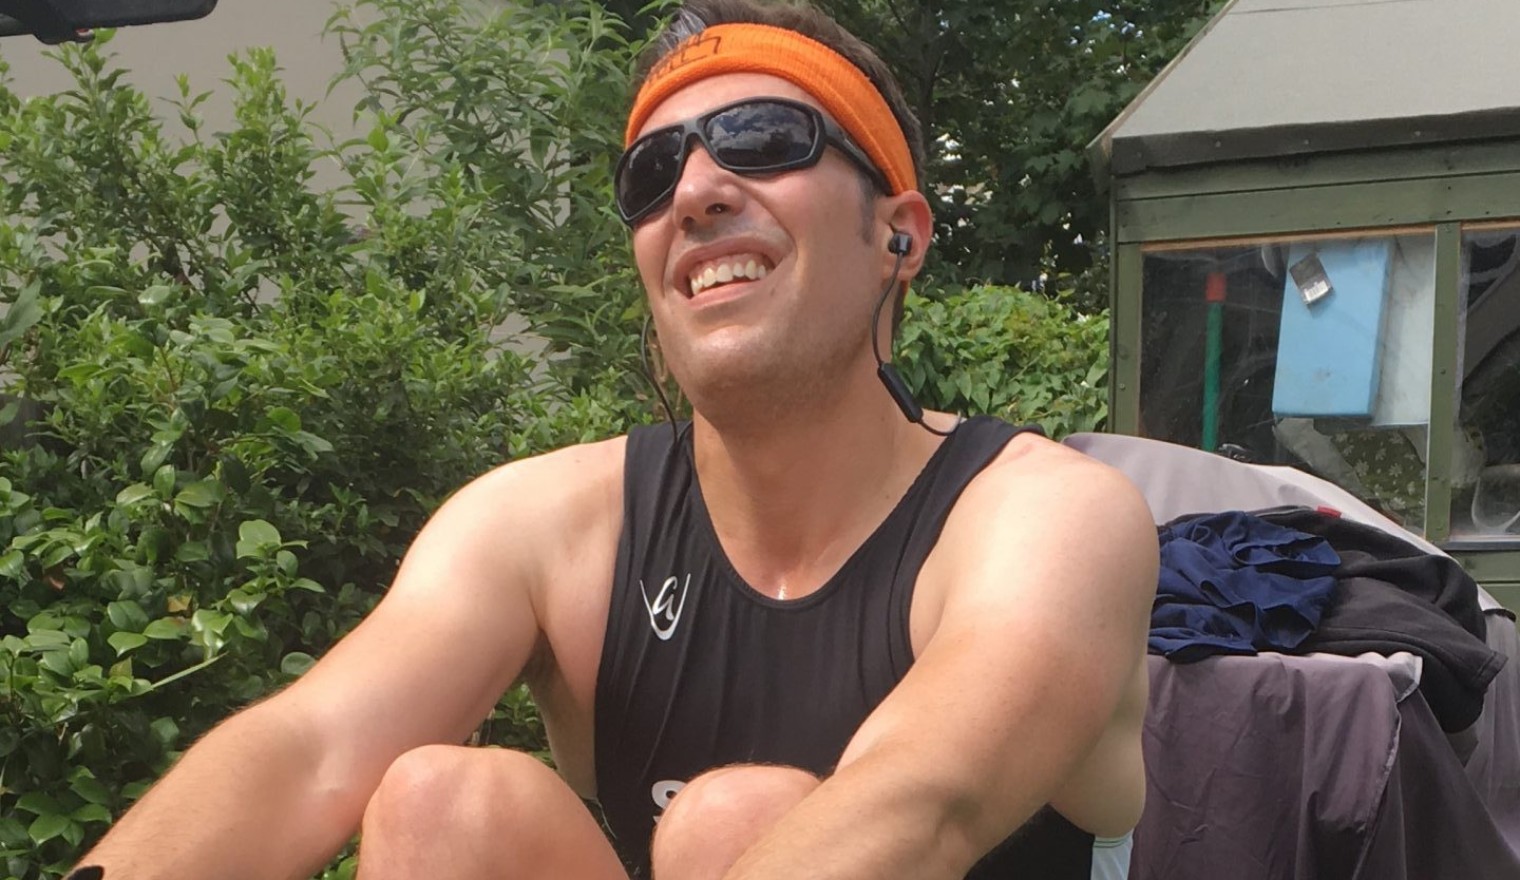 Person on rowing machine, wearing sunglasses and orange sweatband on head